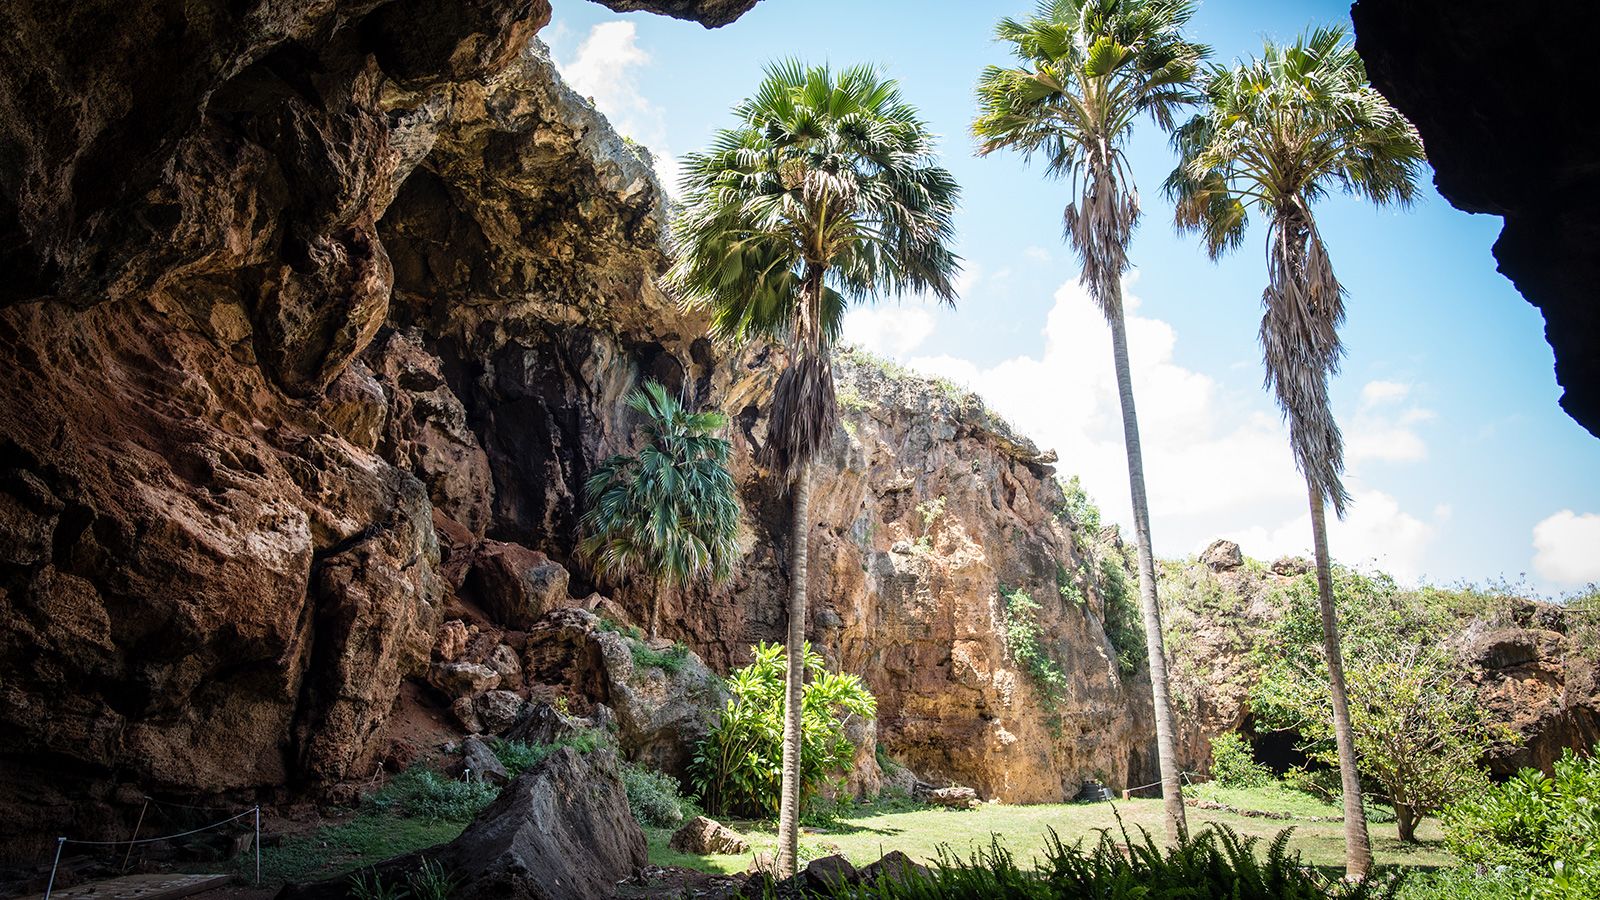 <strong>Kaua'i:</strong> Makauwahi Cave, Hawaiʻi's largest limestone cave, is part of the new South Shore Coastal Hike offered by Kauaʻi Hiking Tours.